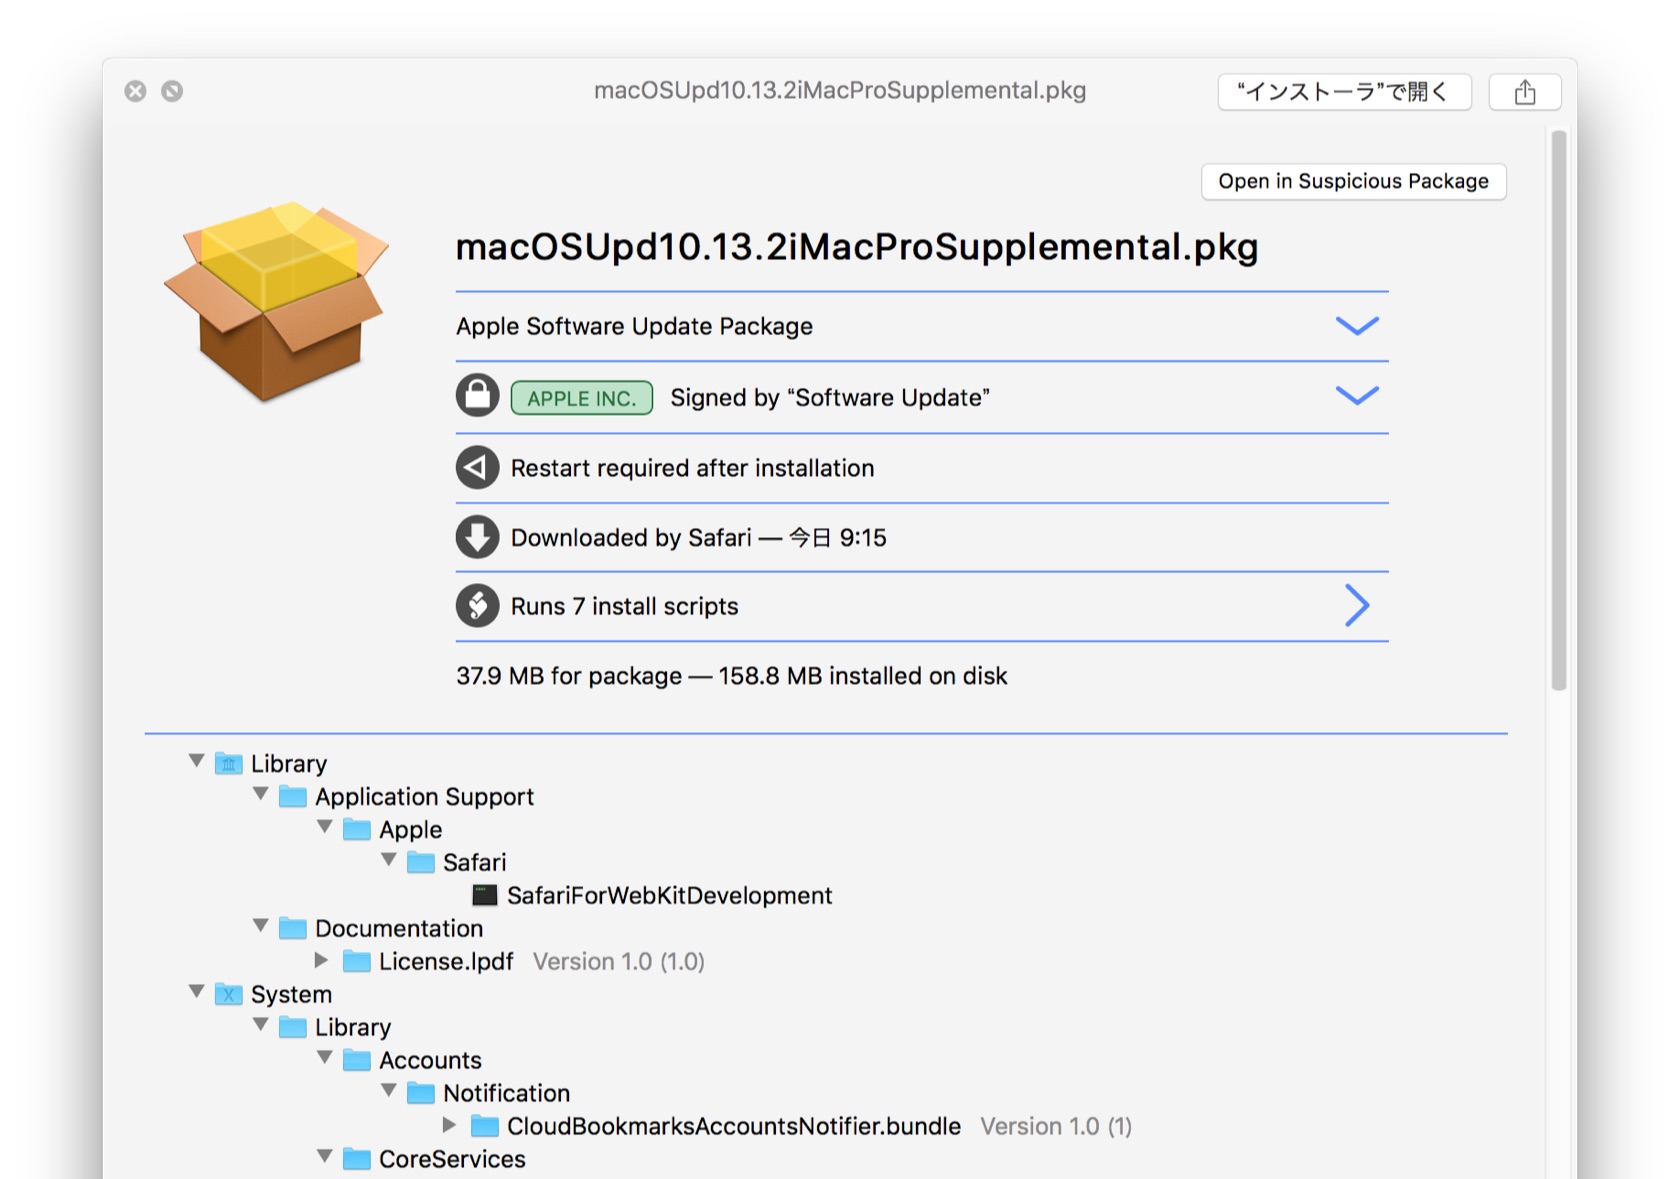 macOS 10.13.2 Build 17C2205 for iMac Pro